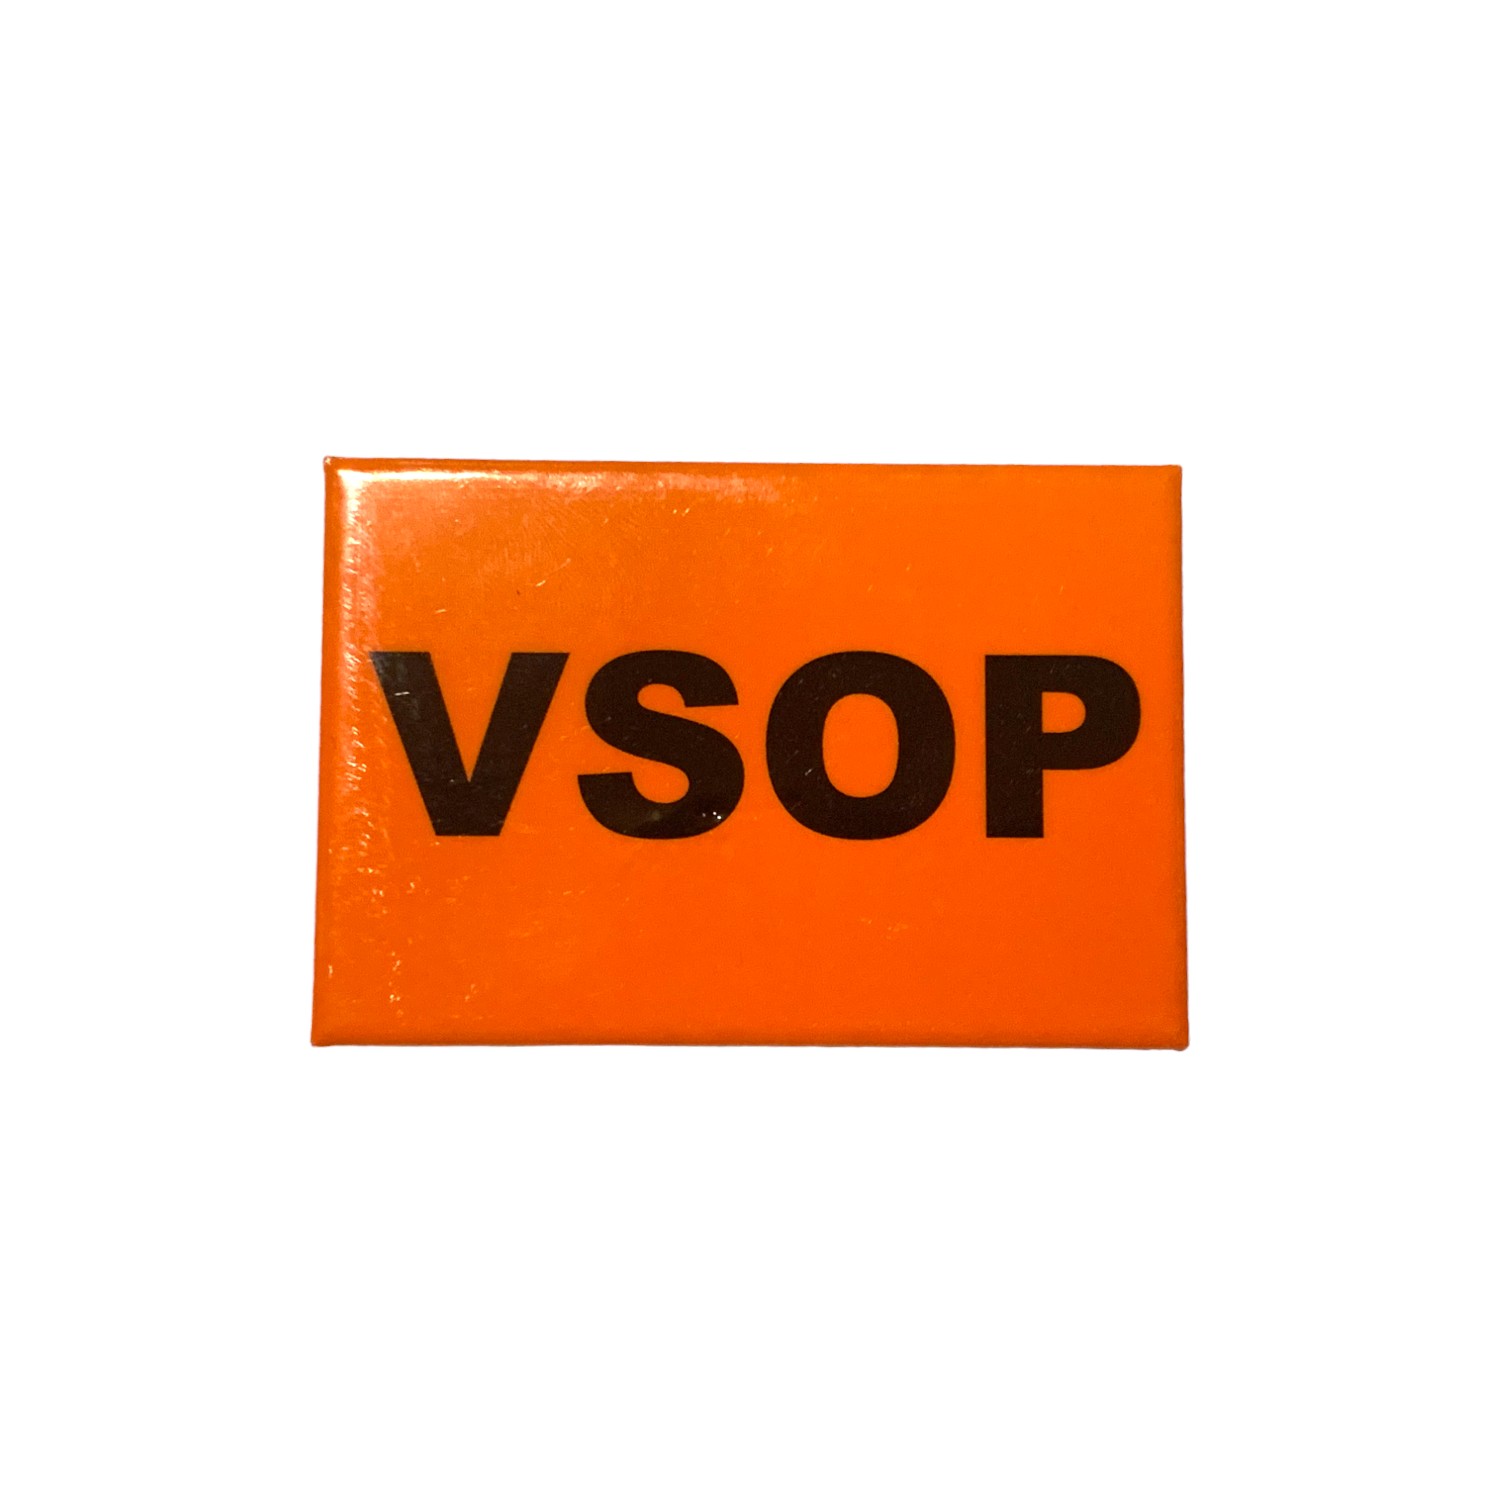 1972 - VSOP